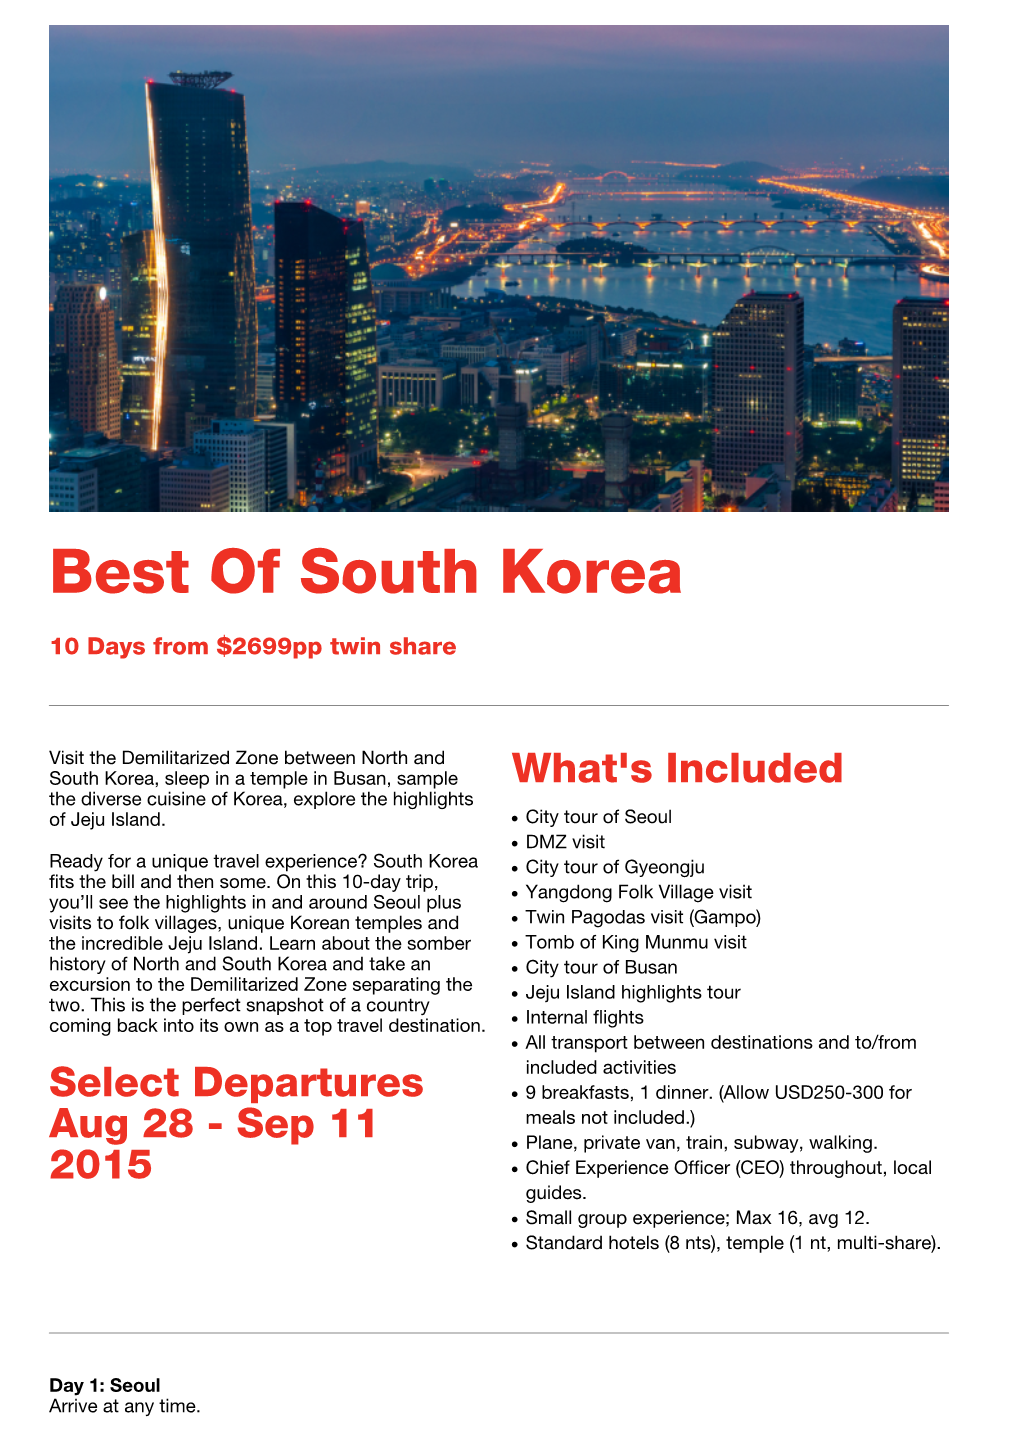 Best of South Korea